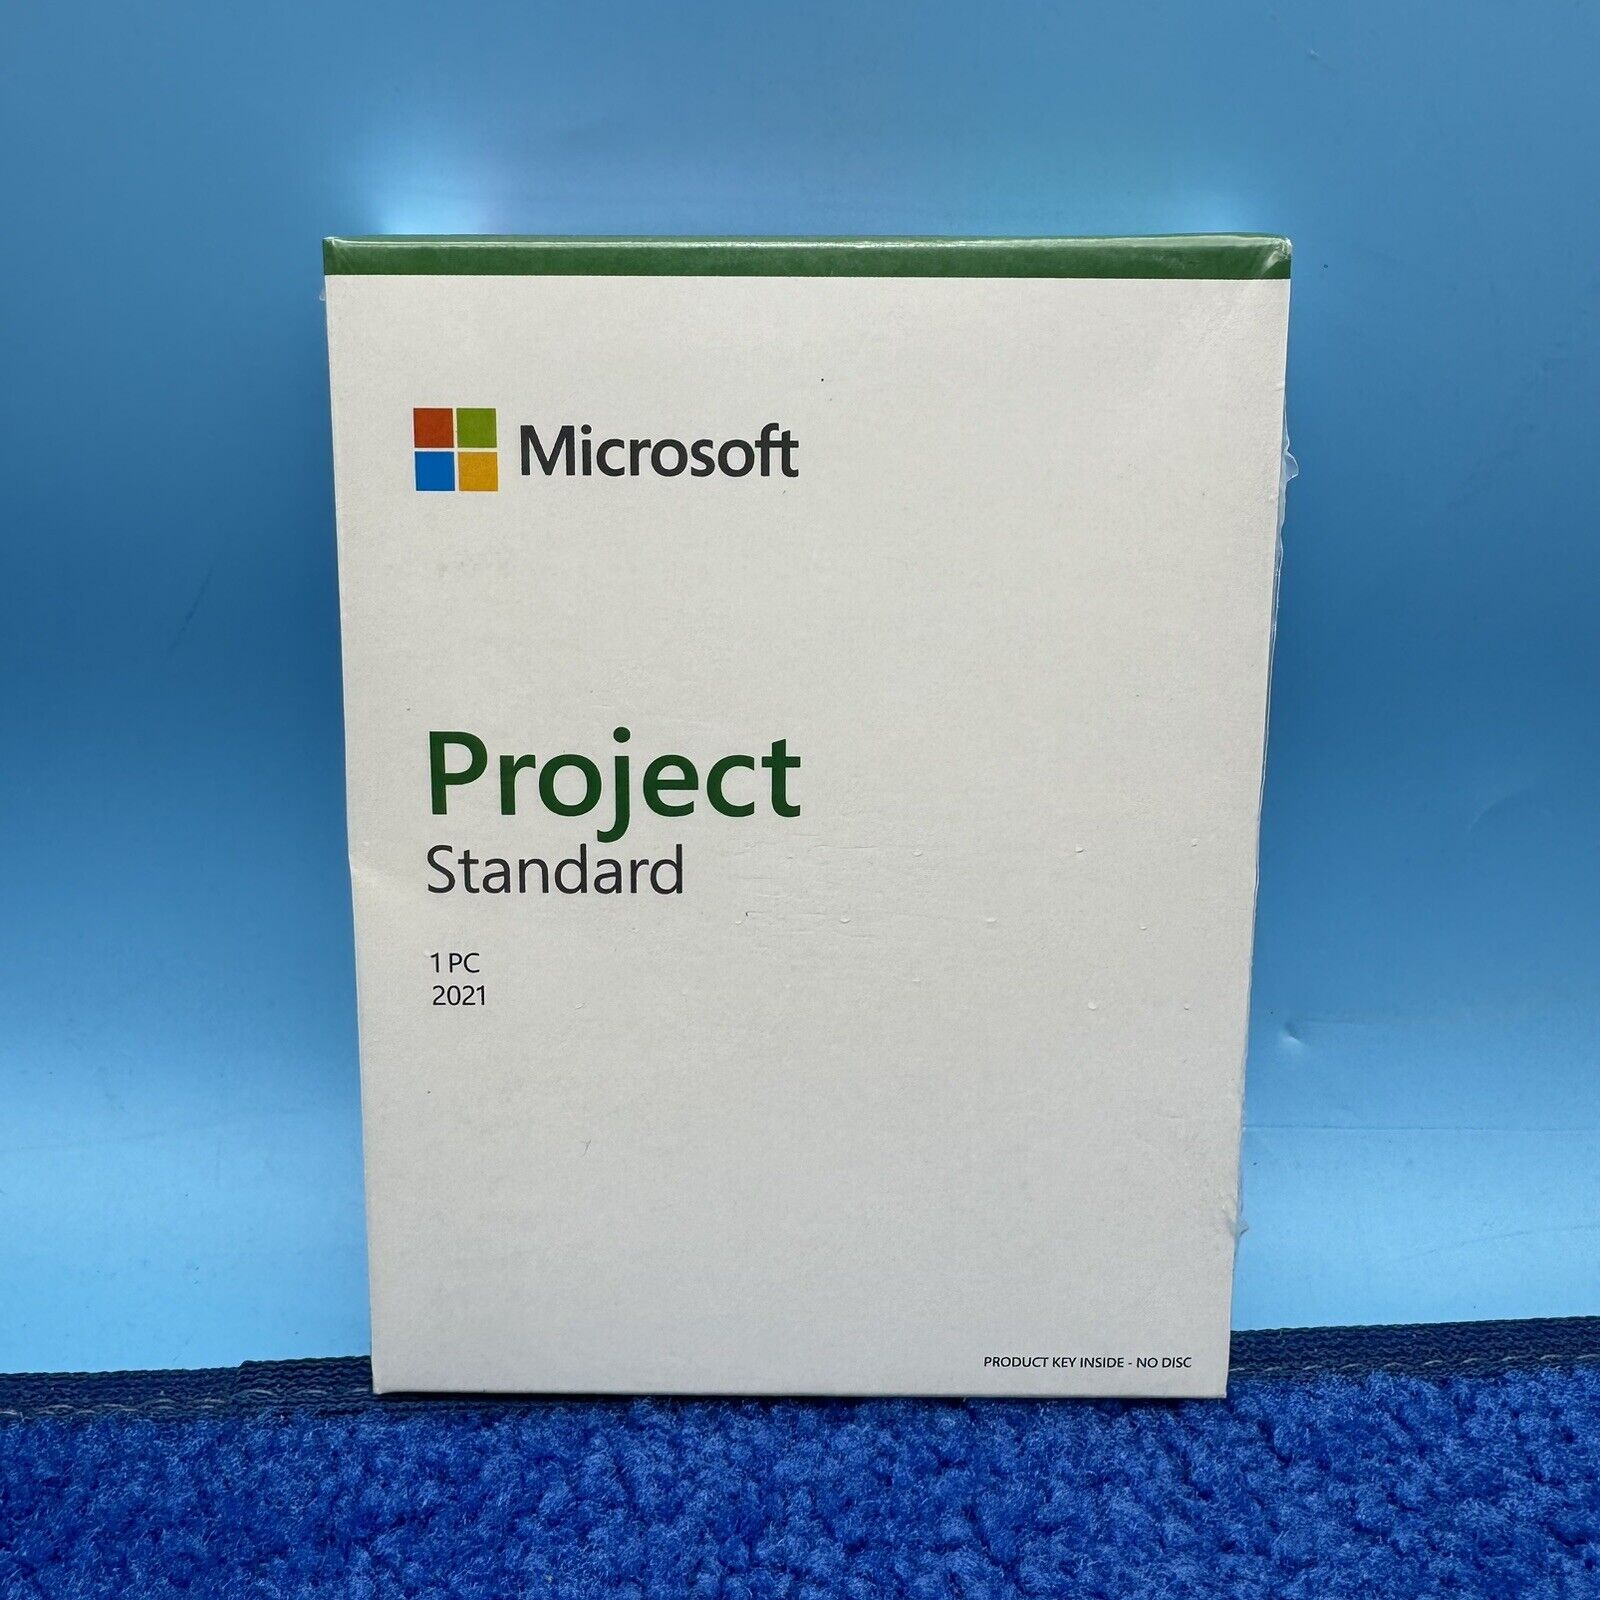 Microsoft Project Standard 2021 - Windows 10 Product Key Card - 1 PC - SEALED